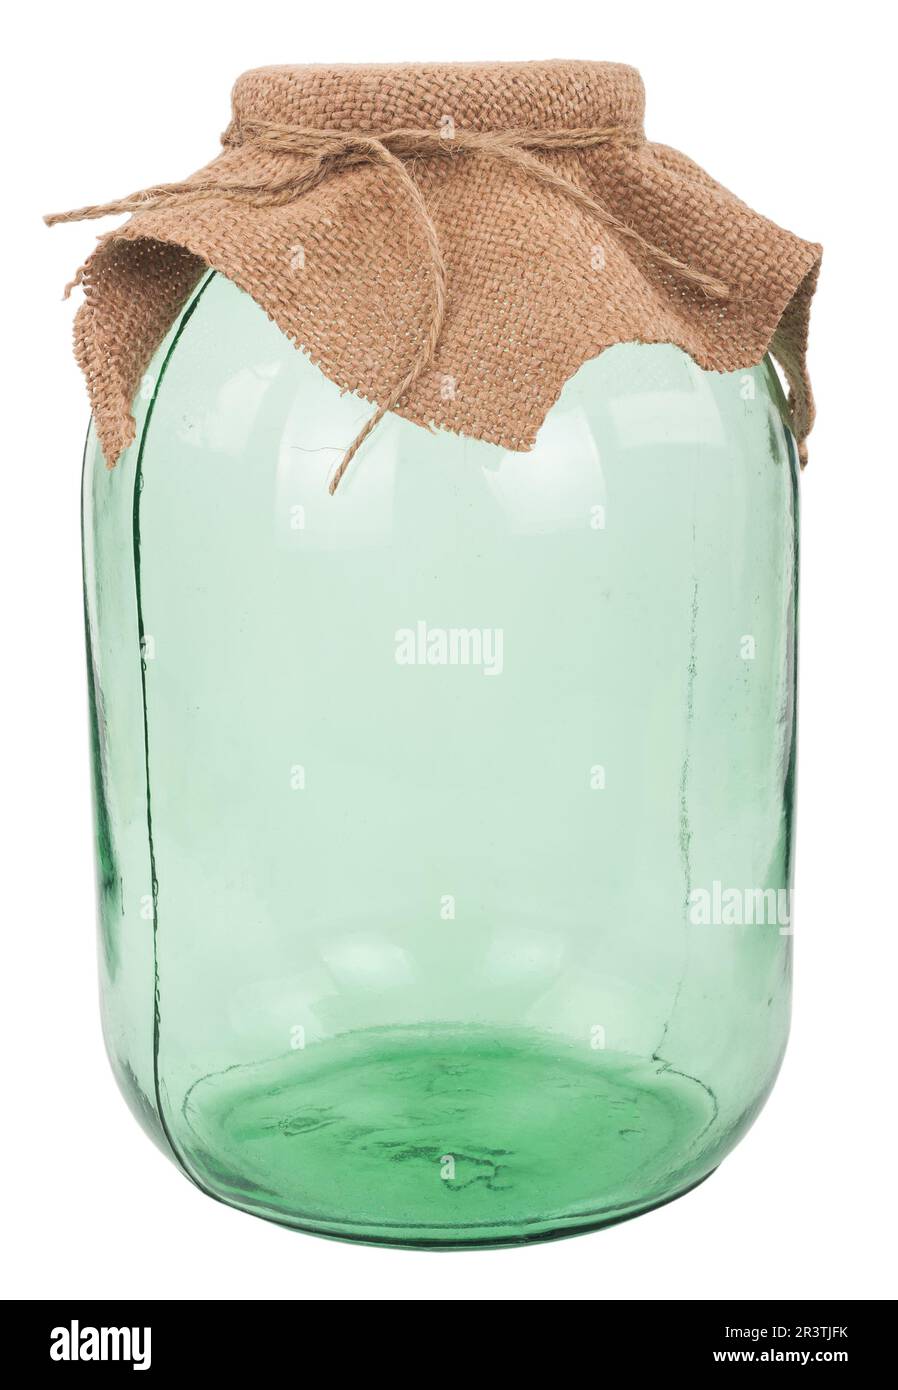 Closed three-liter glass jar Stock Photo